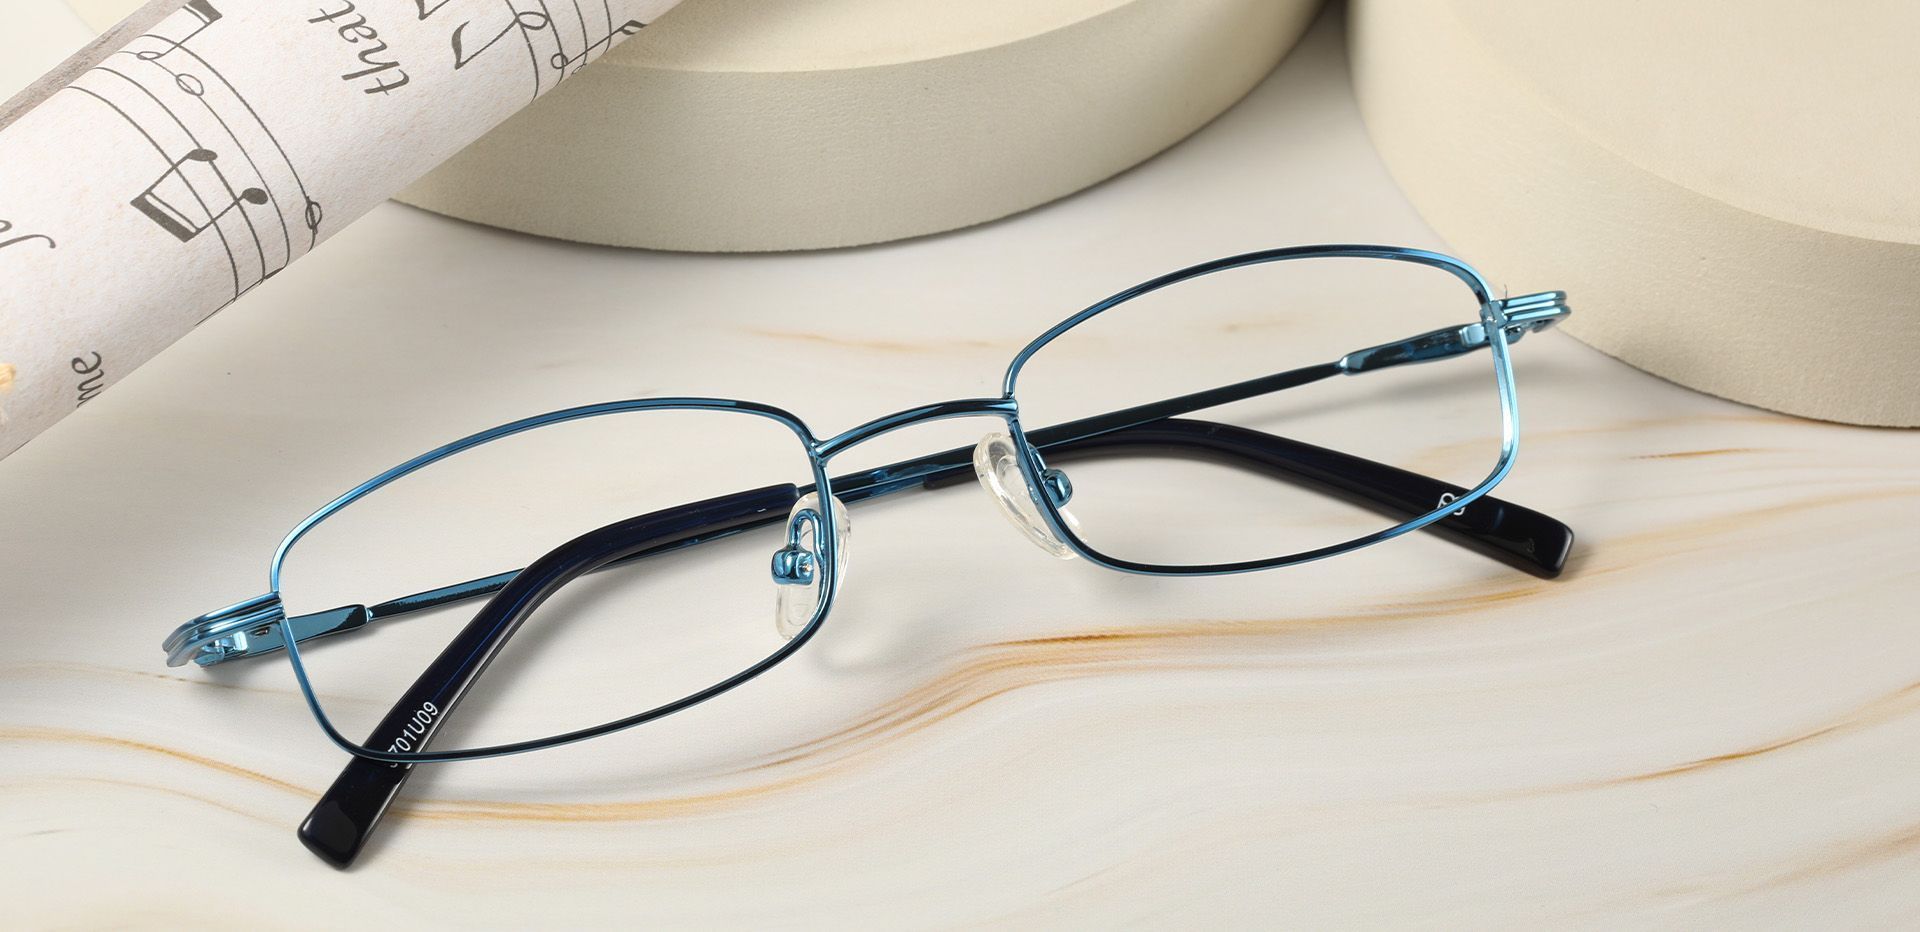 Karl Rectangle Single Vision Glasses - Royal Blue | Men's Eyeglasses ...